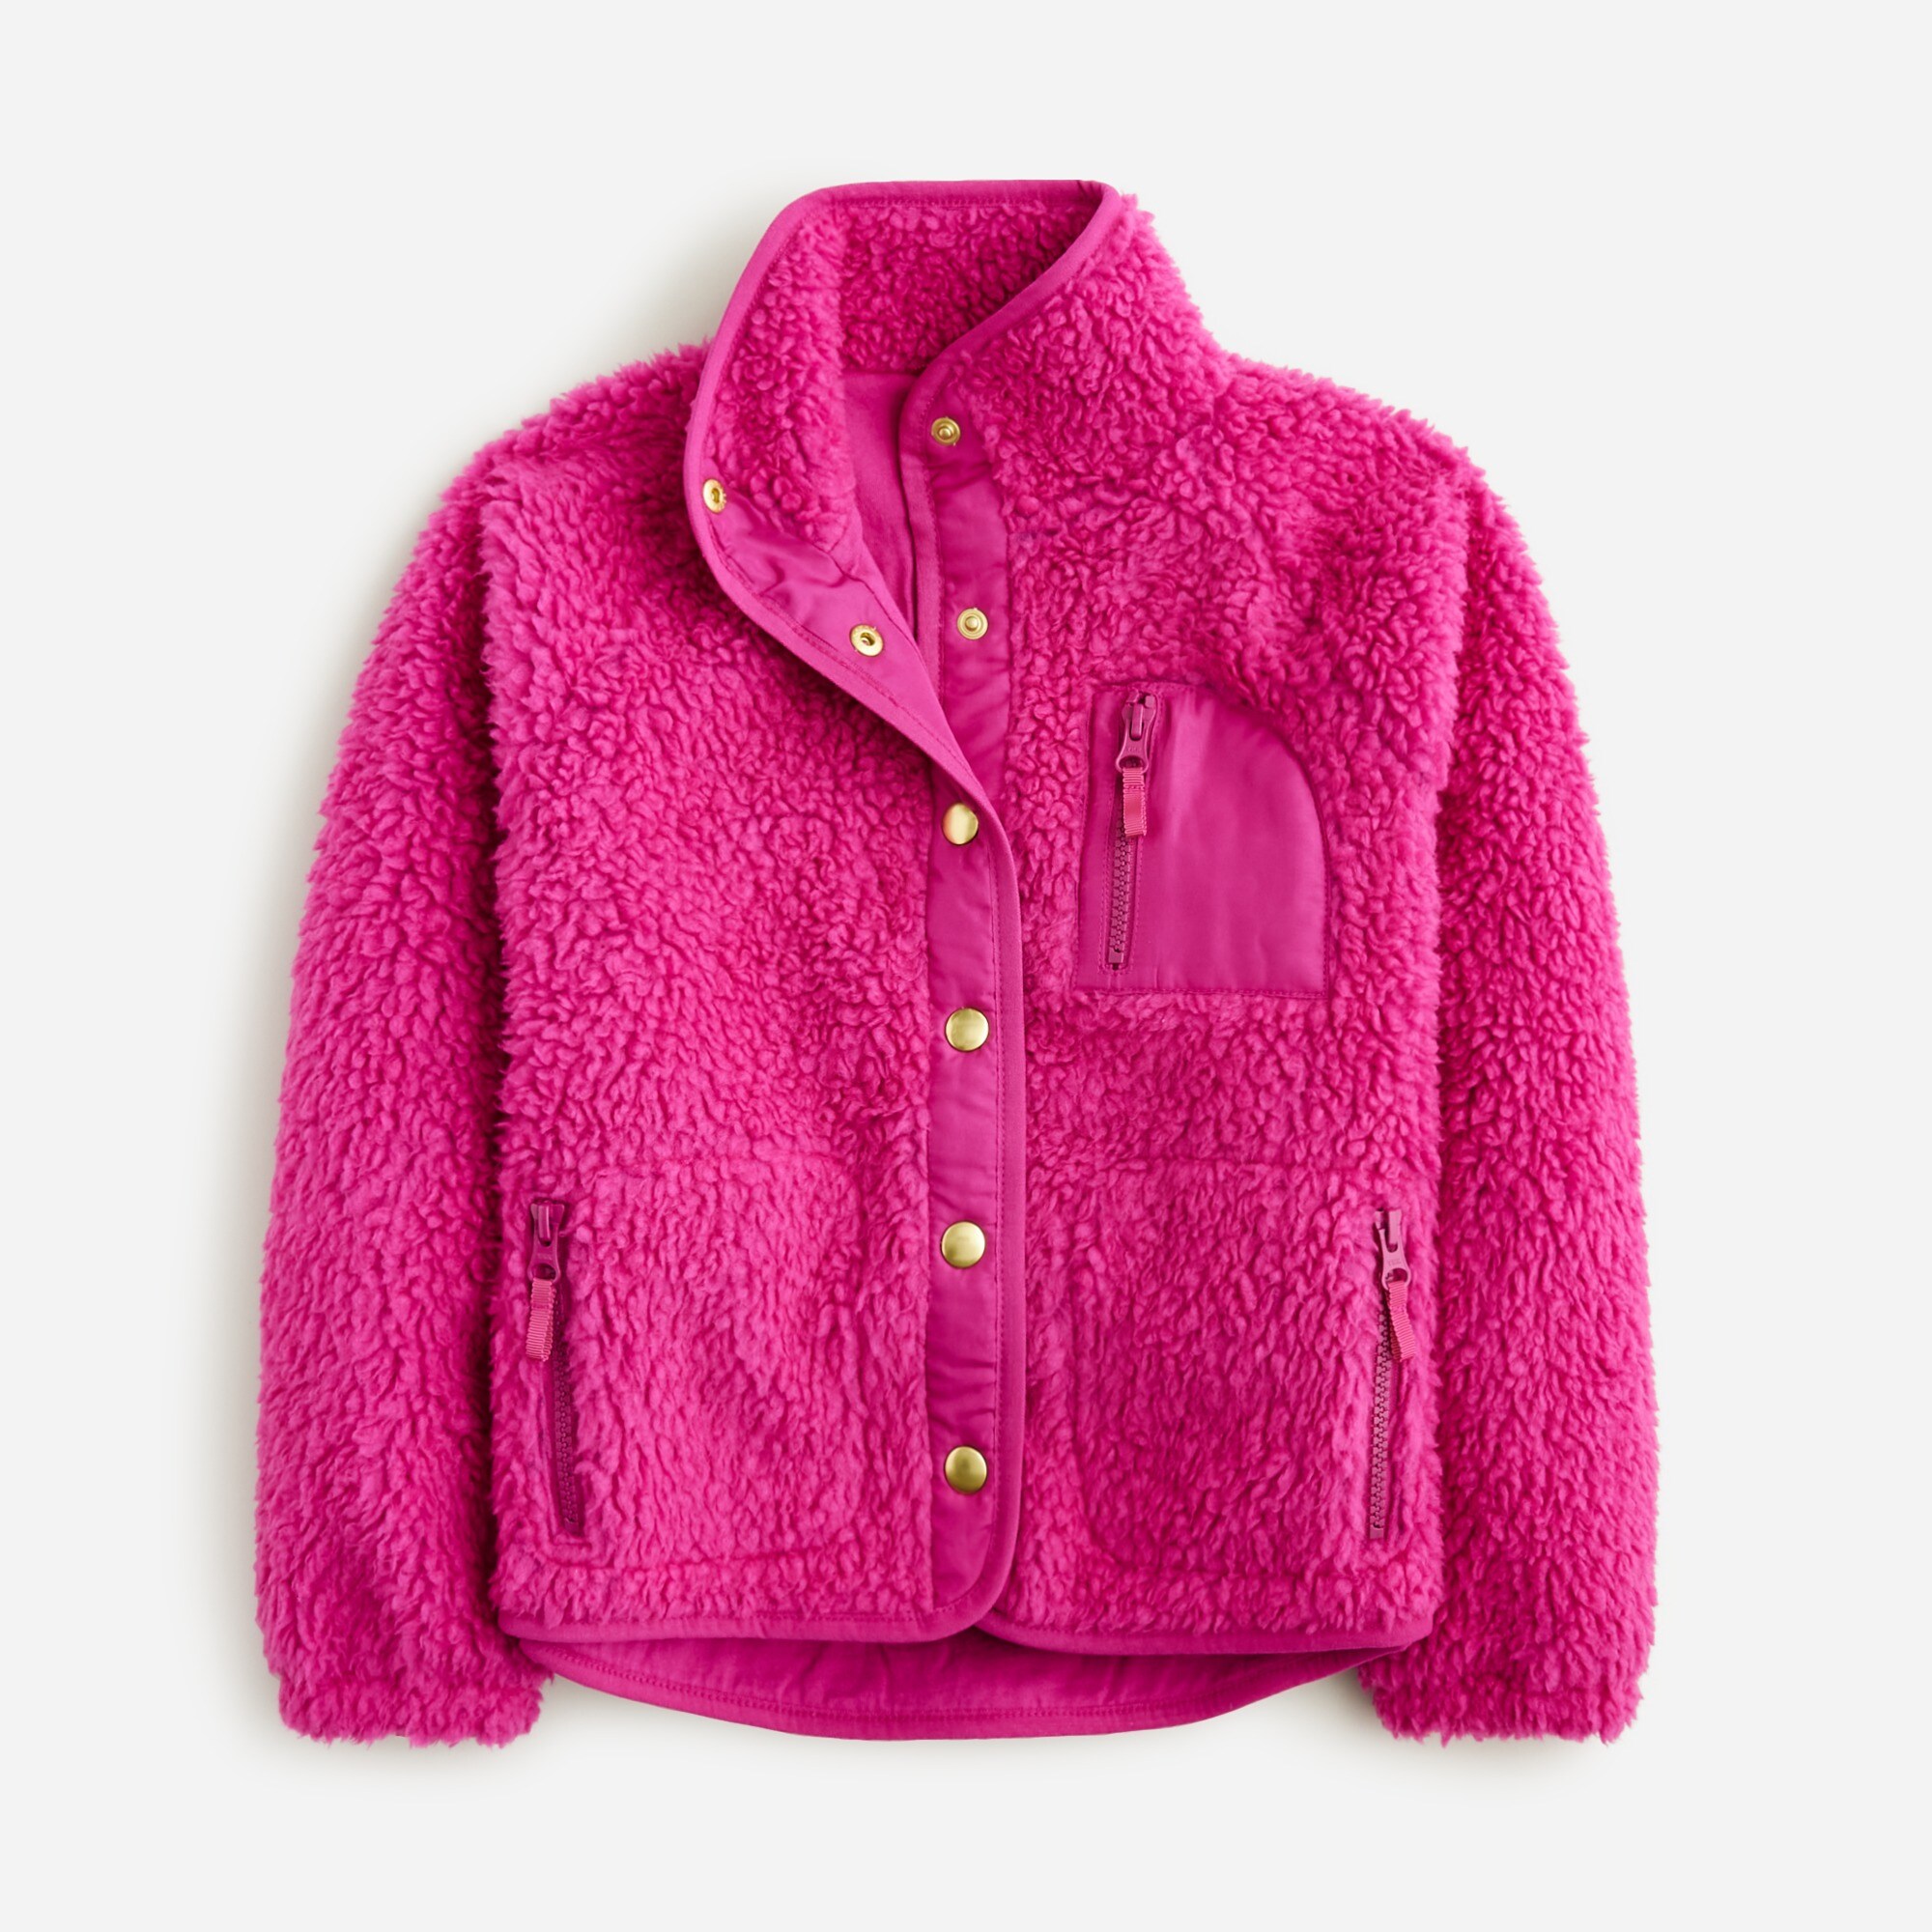  Girls' button-up sherpa jacket